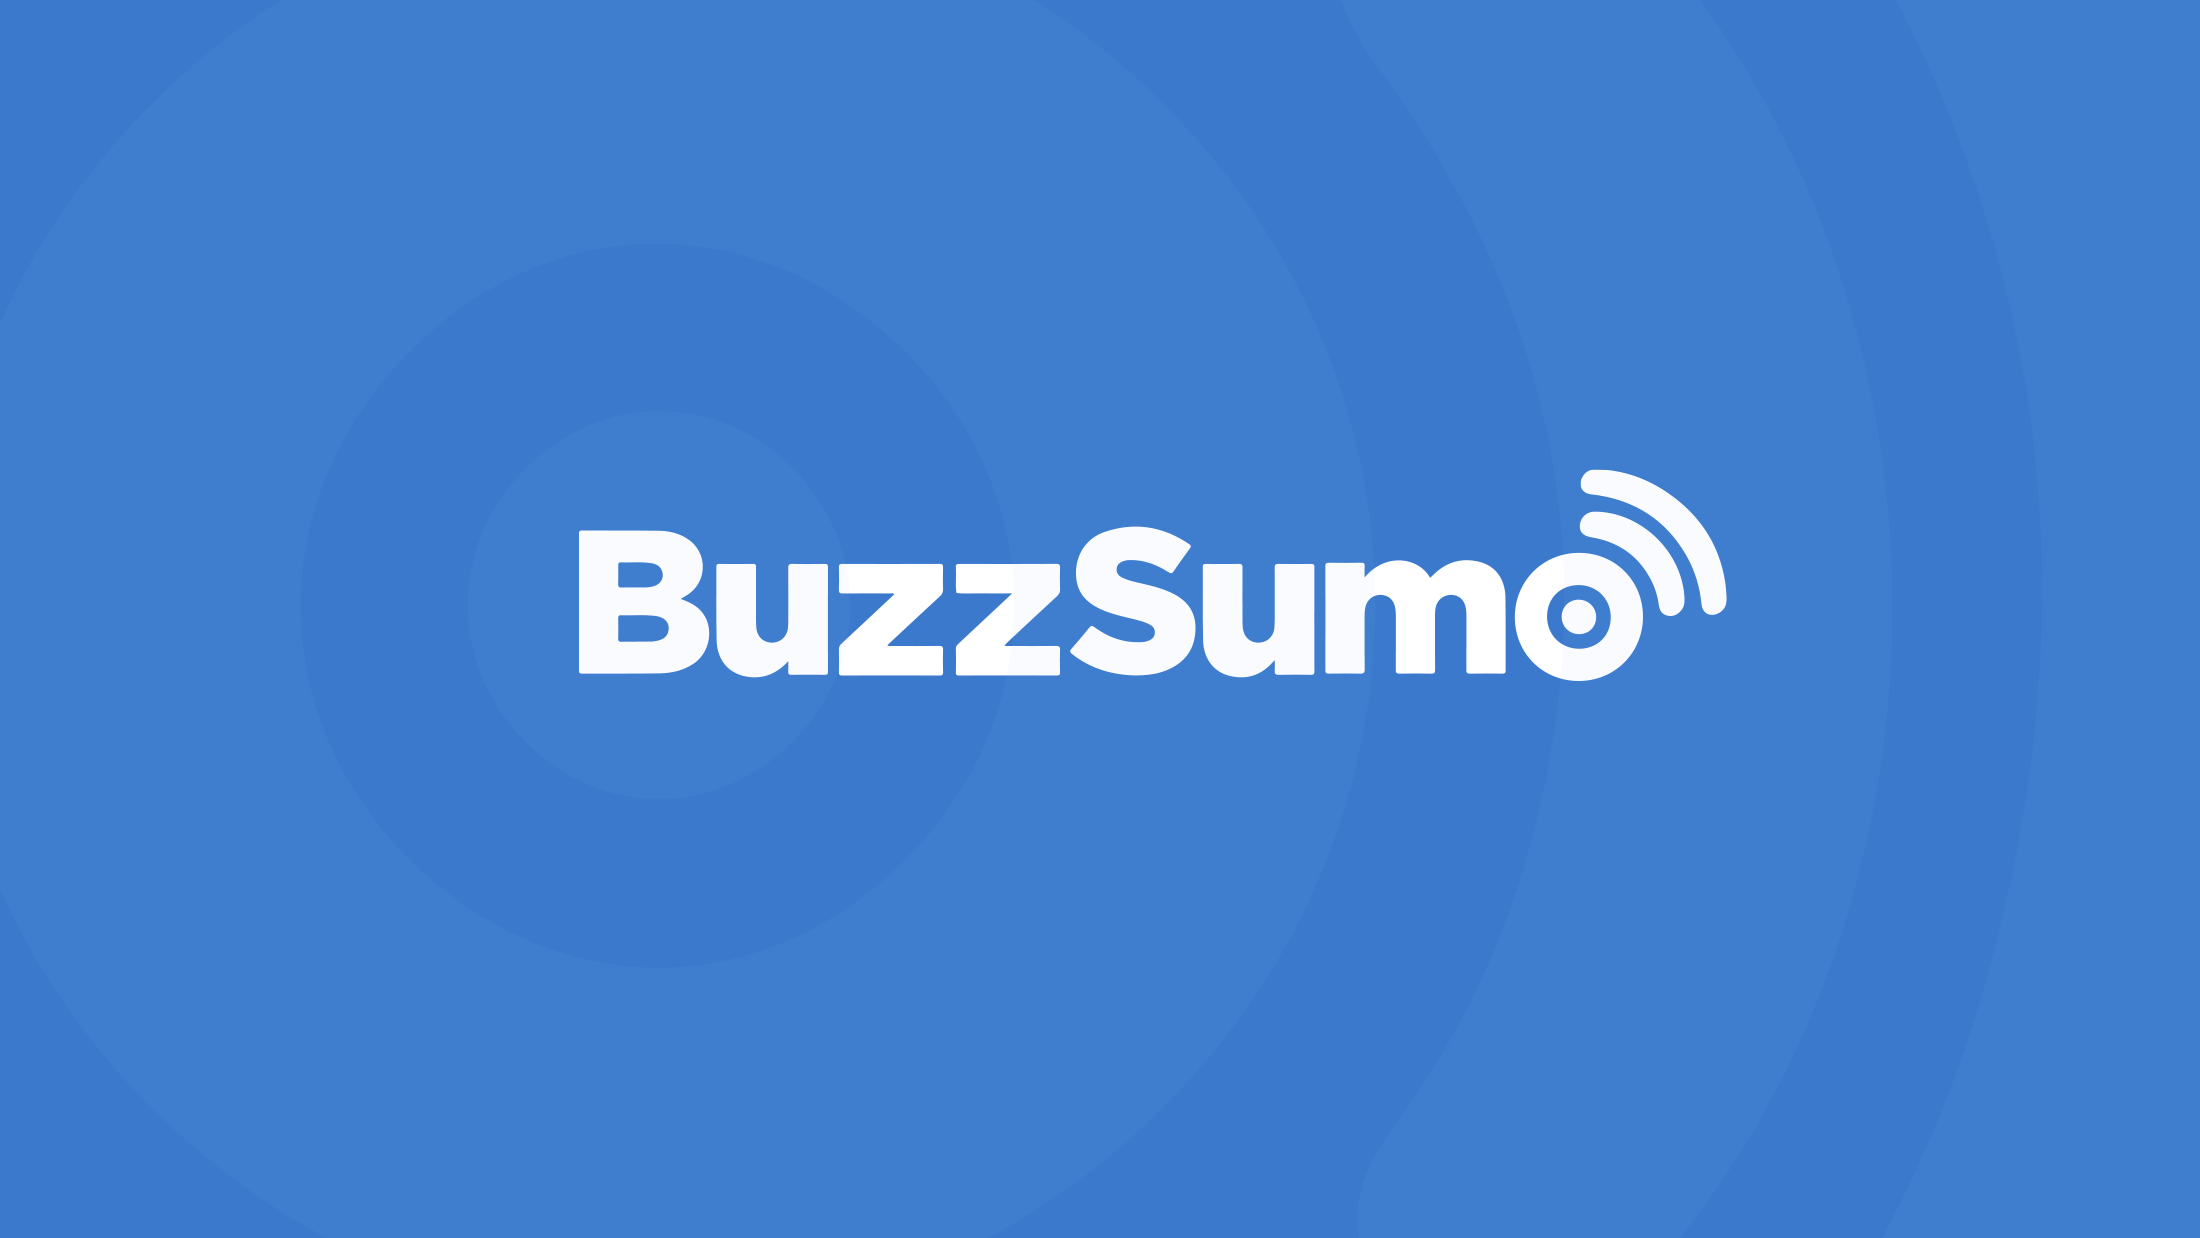 buzzsumo group buy